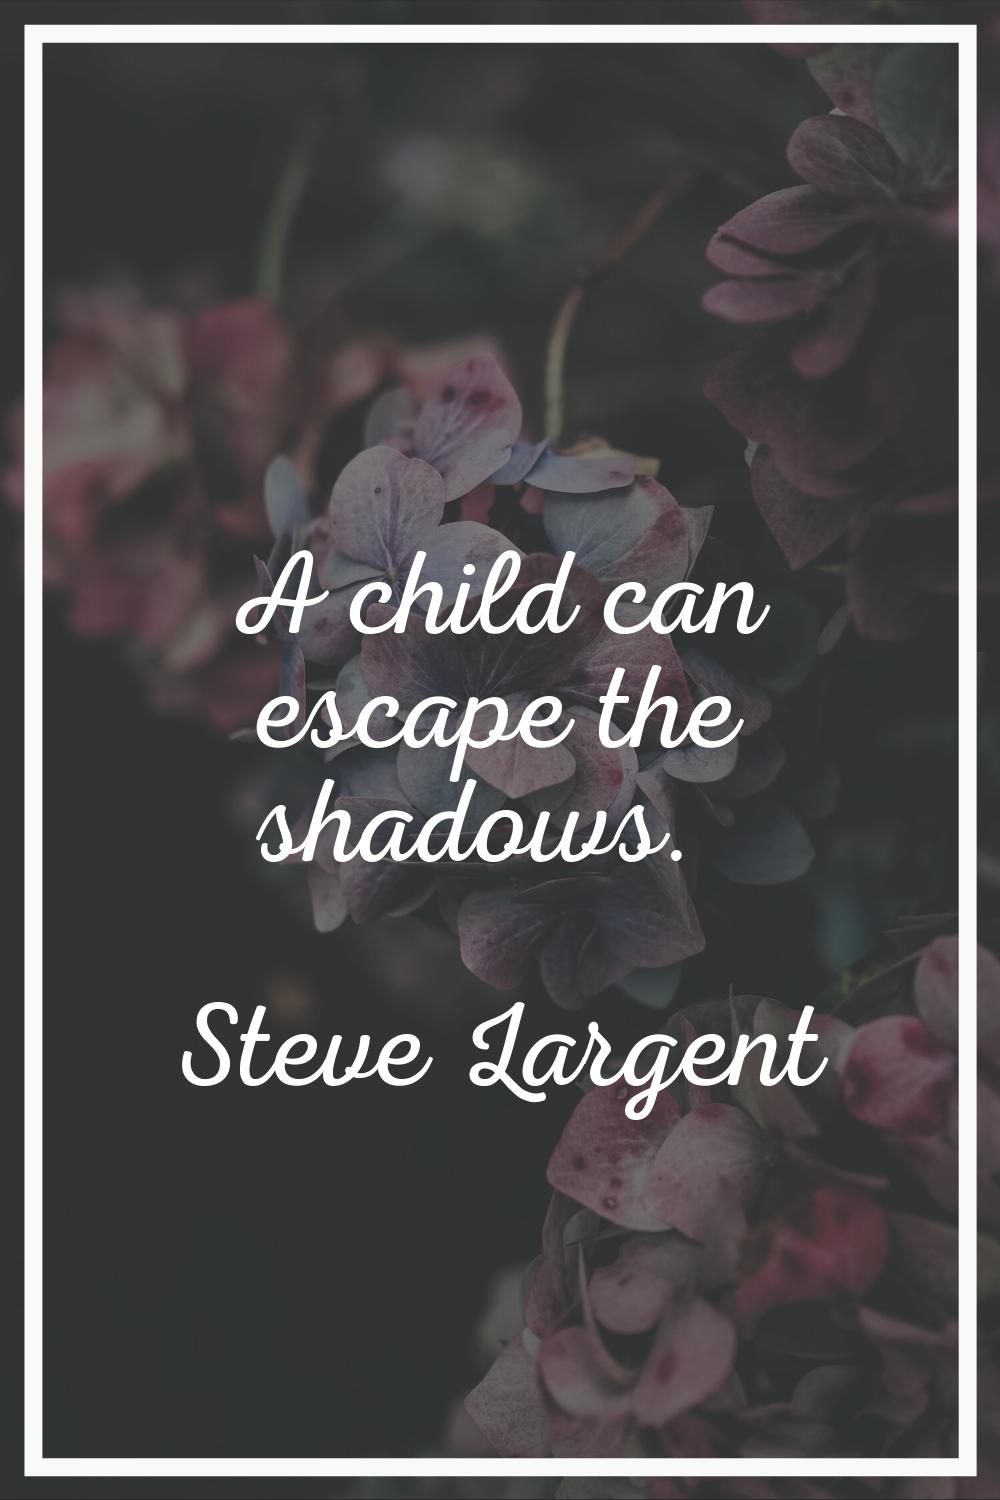 A child can escape the shadows.